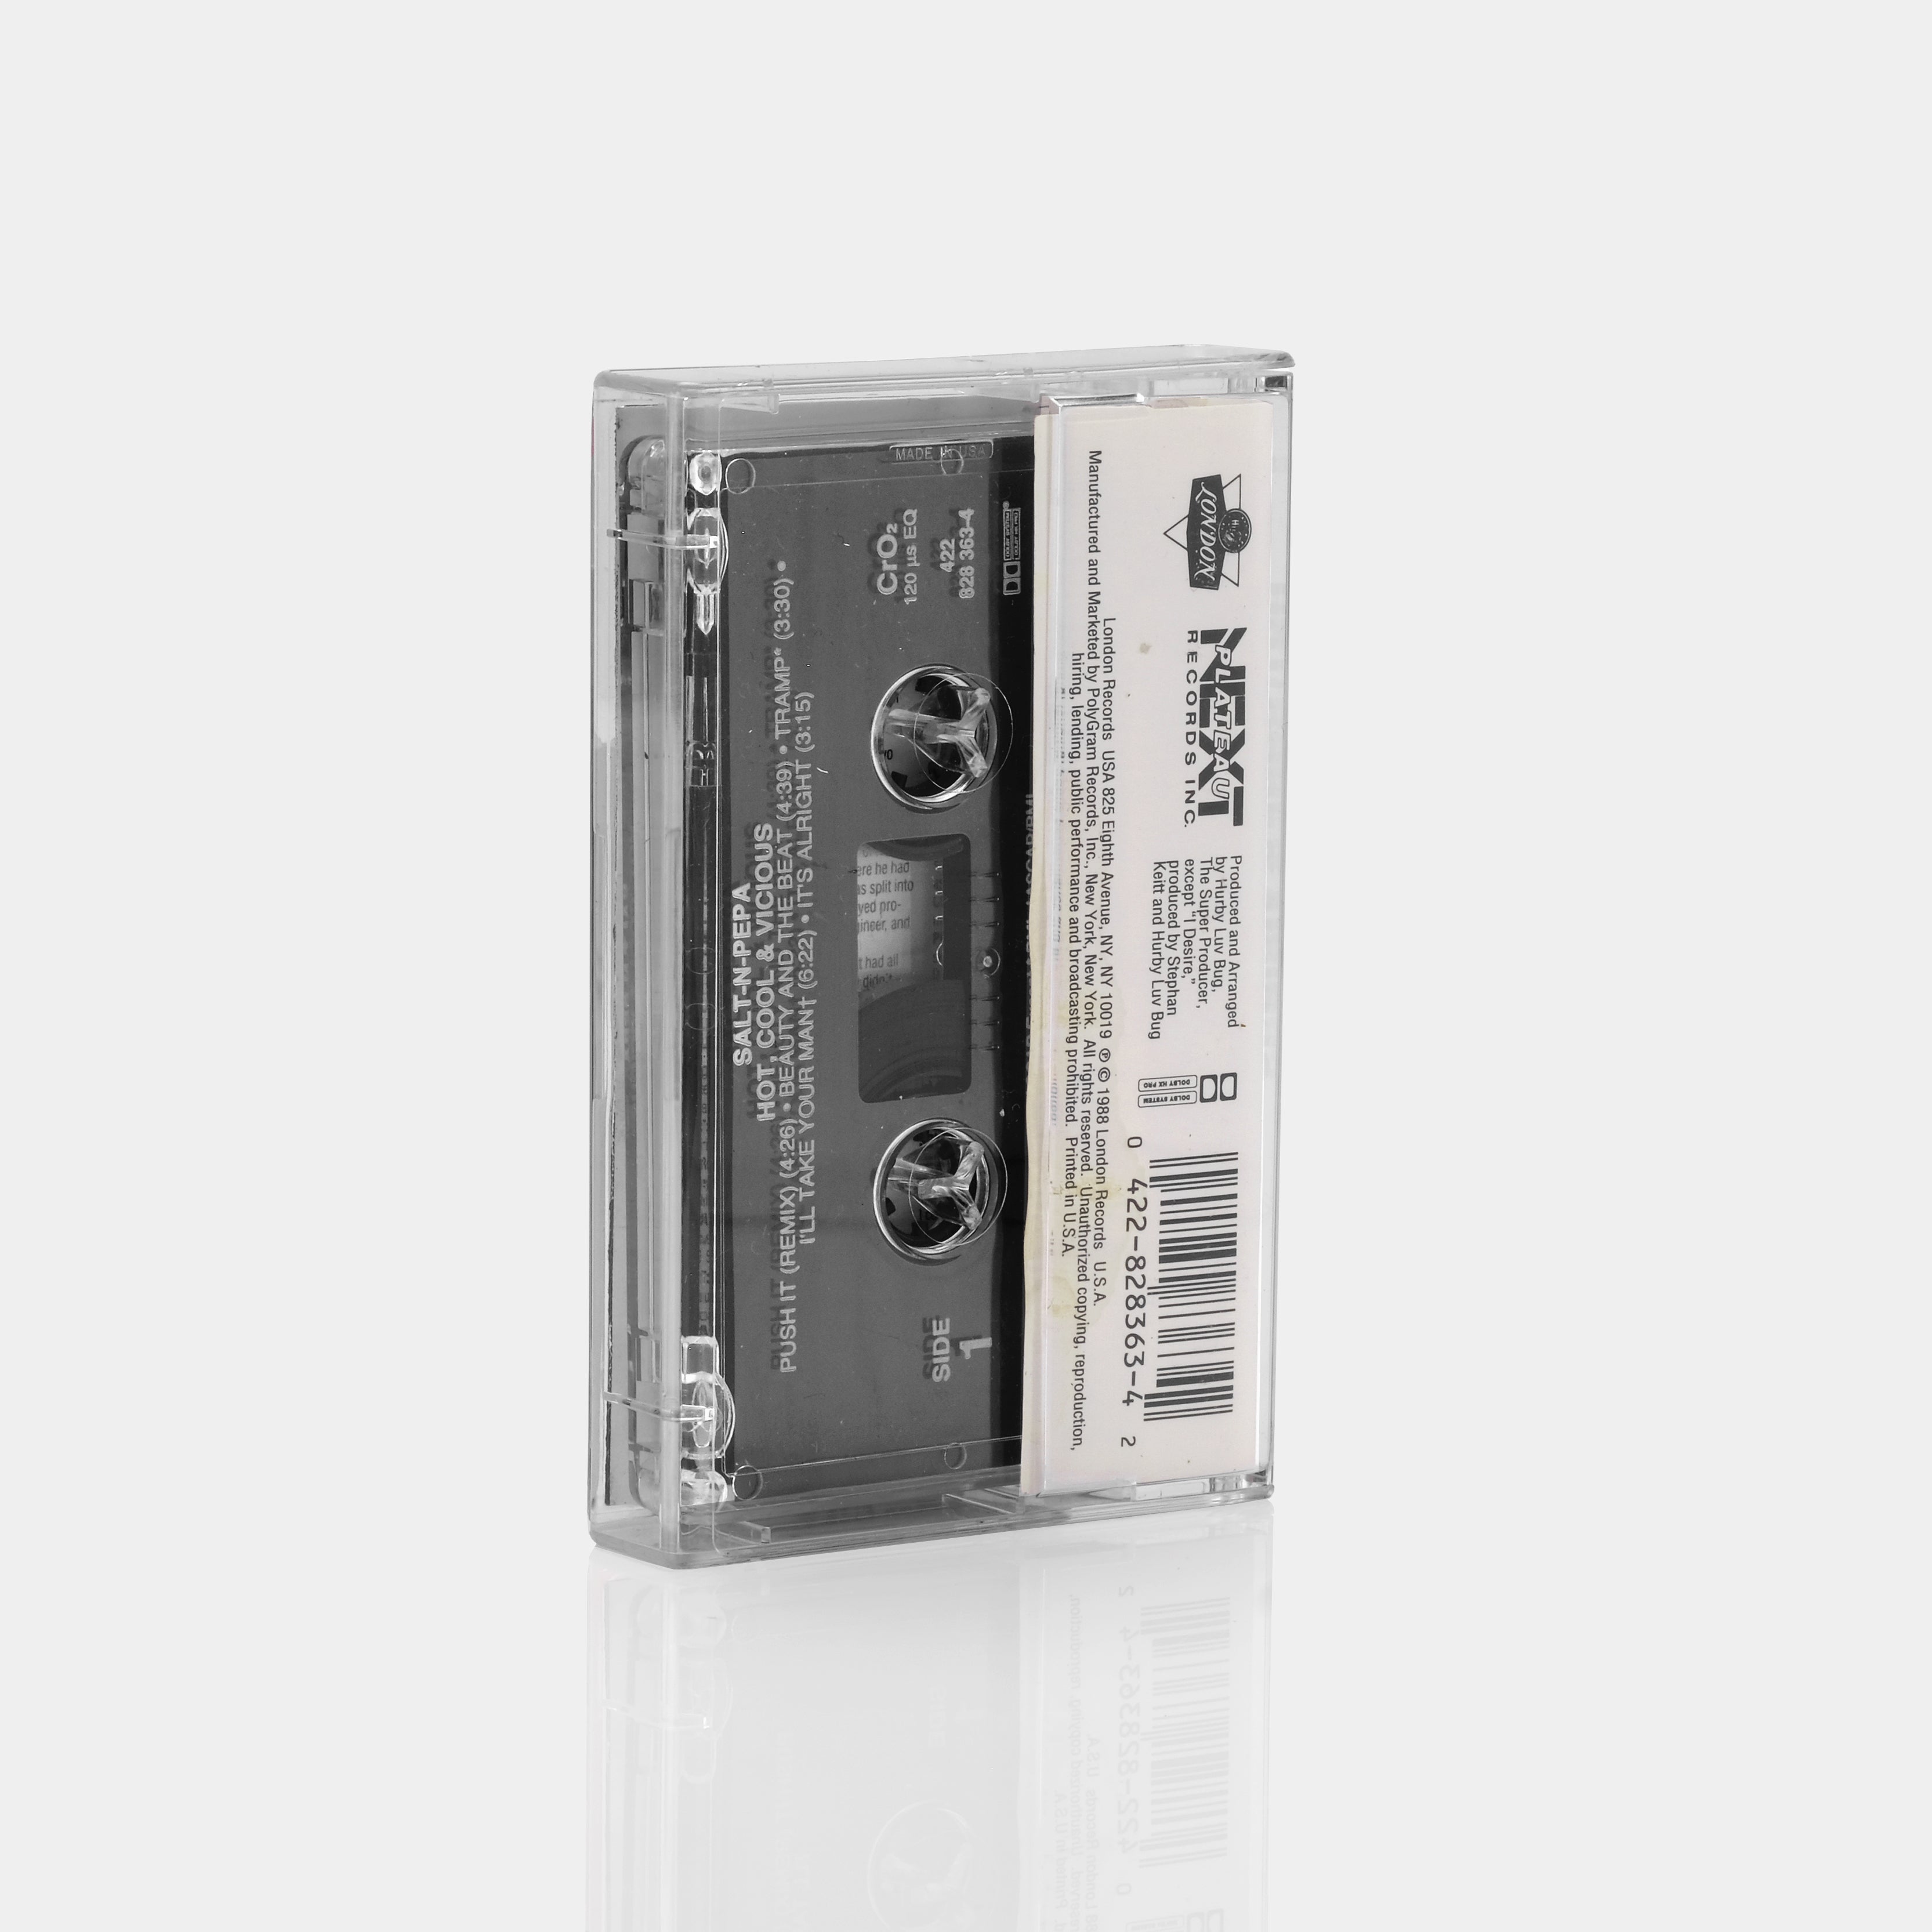 Salt 'N Pepa - Hot, Cool & Vicious Cassette Tape